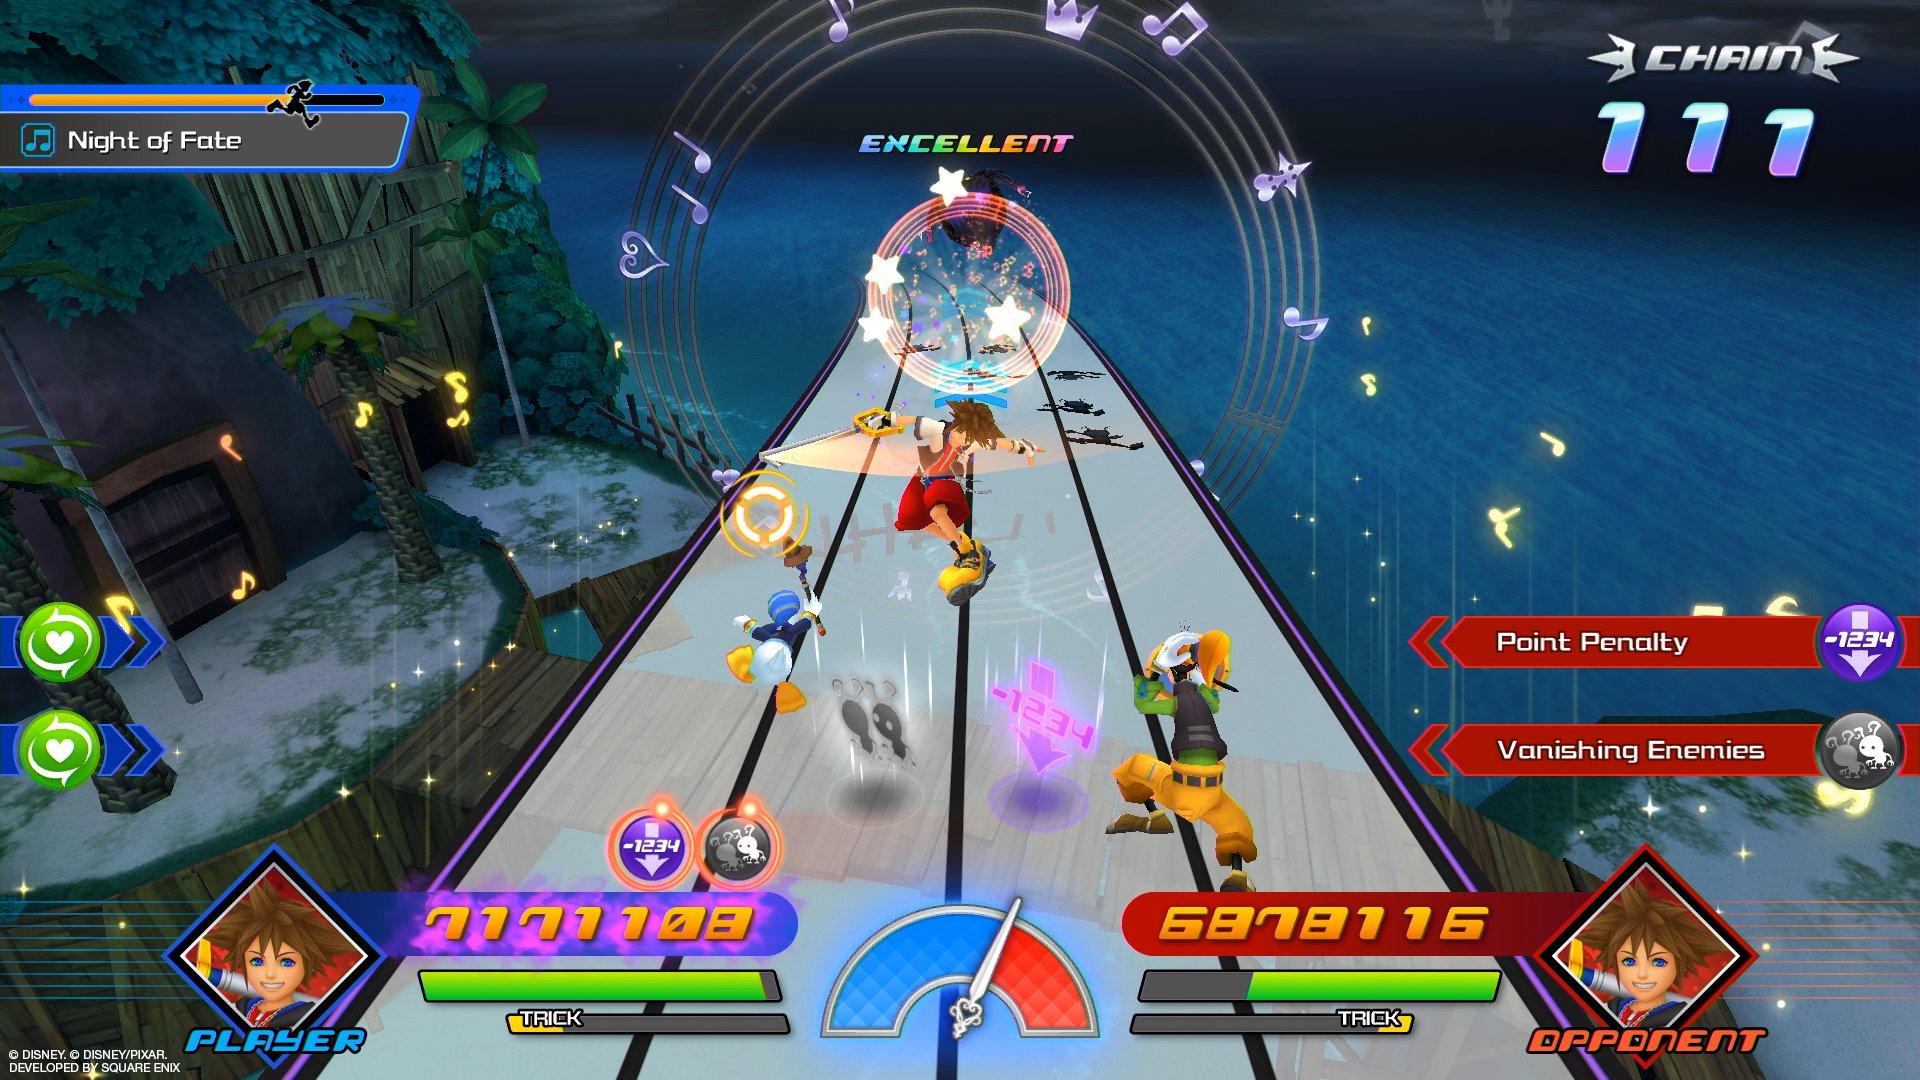 Thrust vil gøre forpligtelse Kingdom Hearts Melody of Memory - PS4 | PlayStation 4 | GameStop